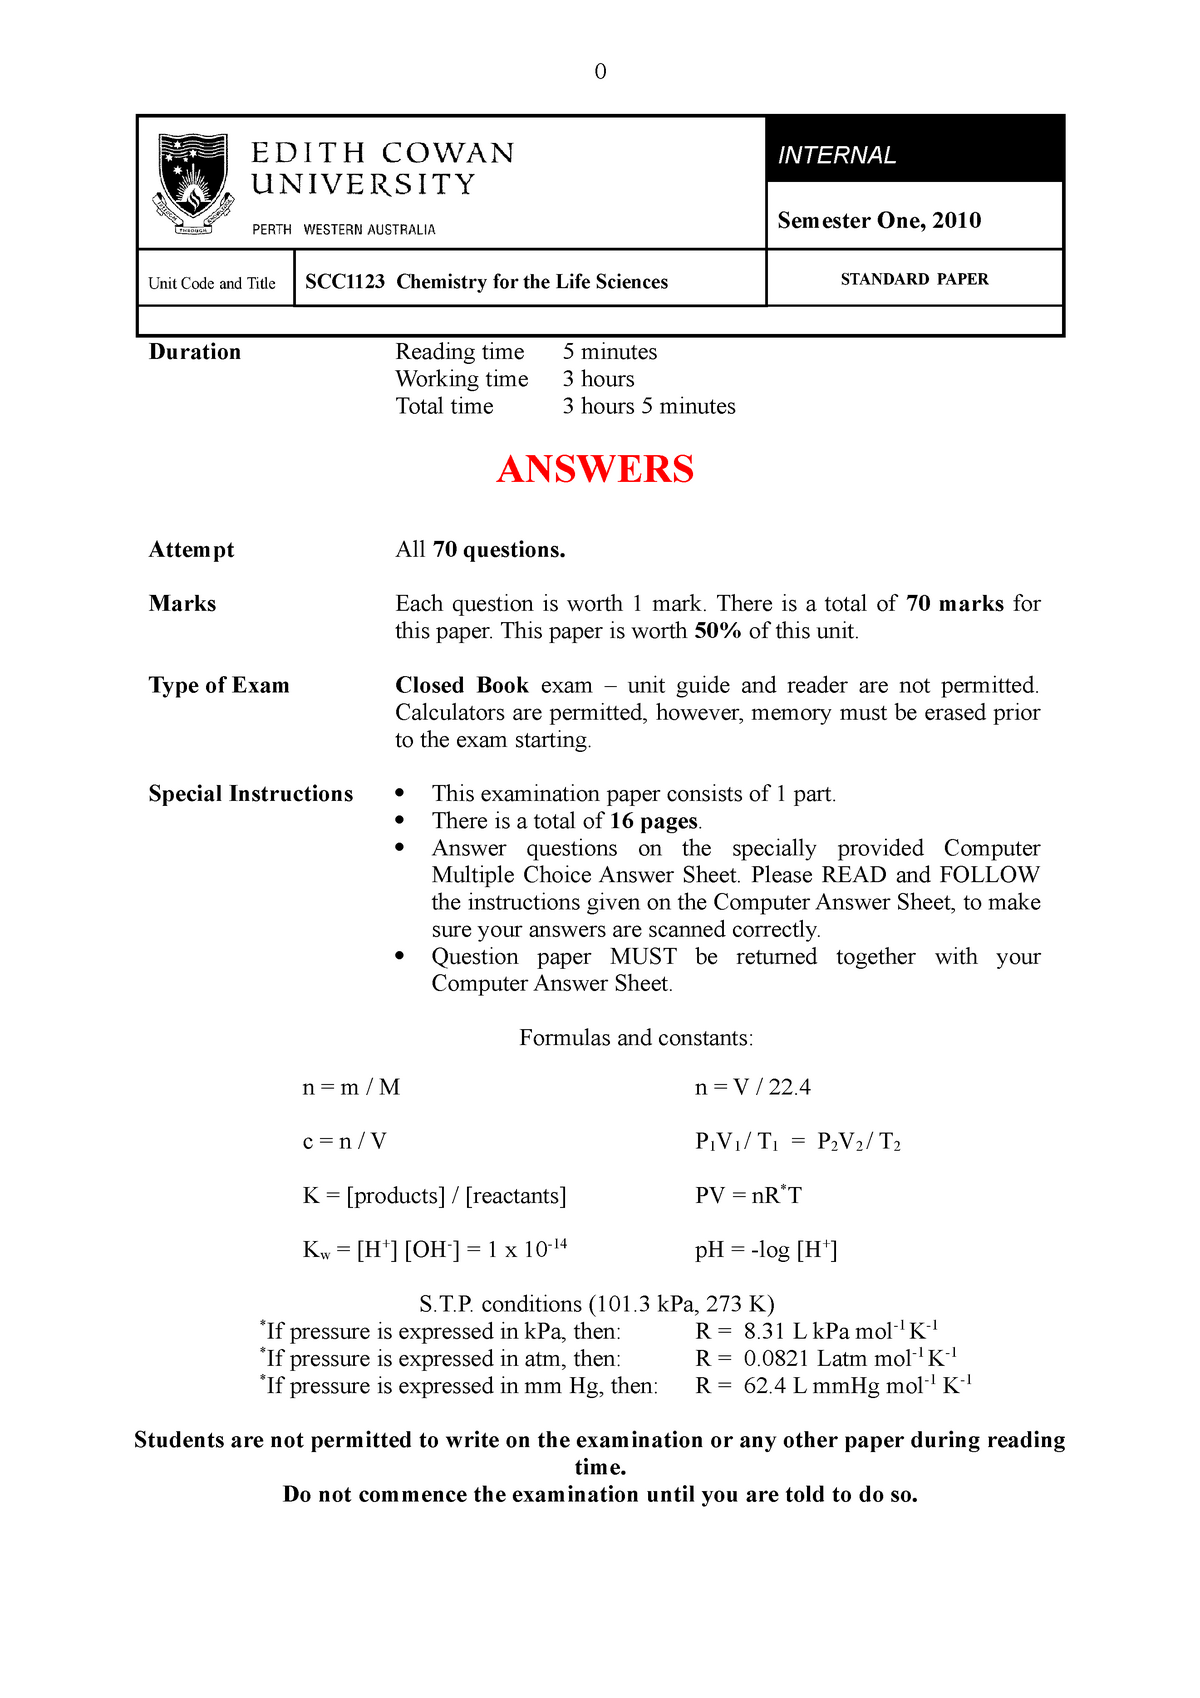 scc1123-exam-answers-2010-2-1-internal-semester-one-2010-unit